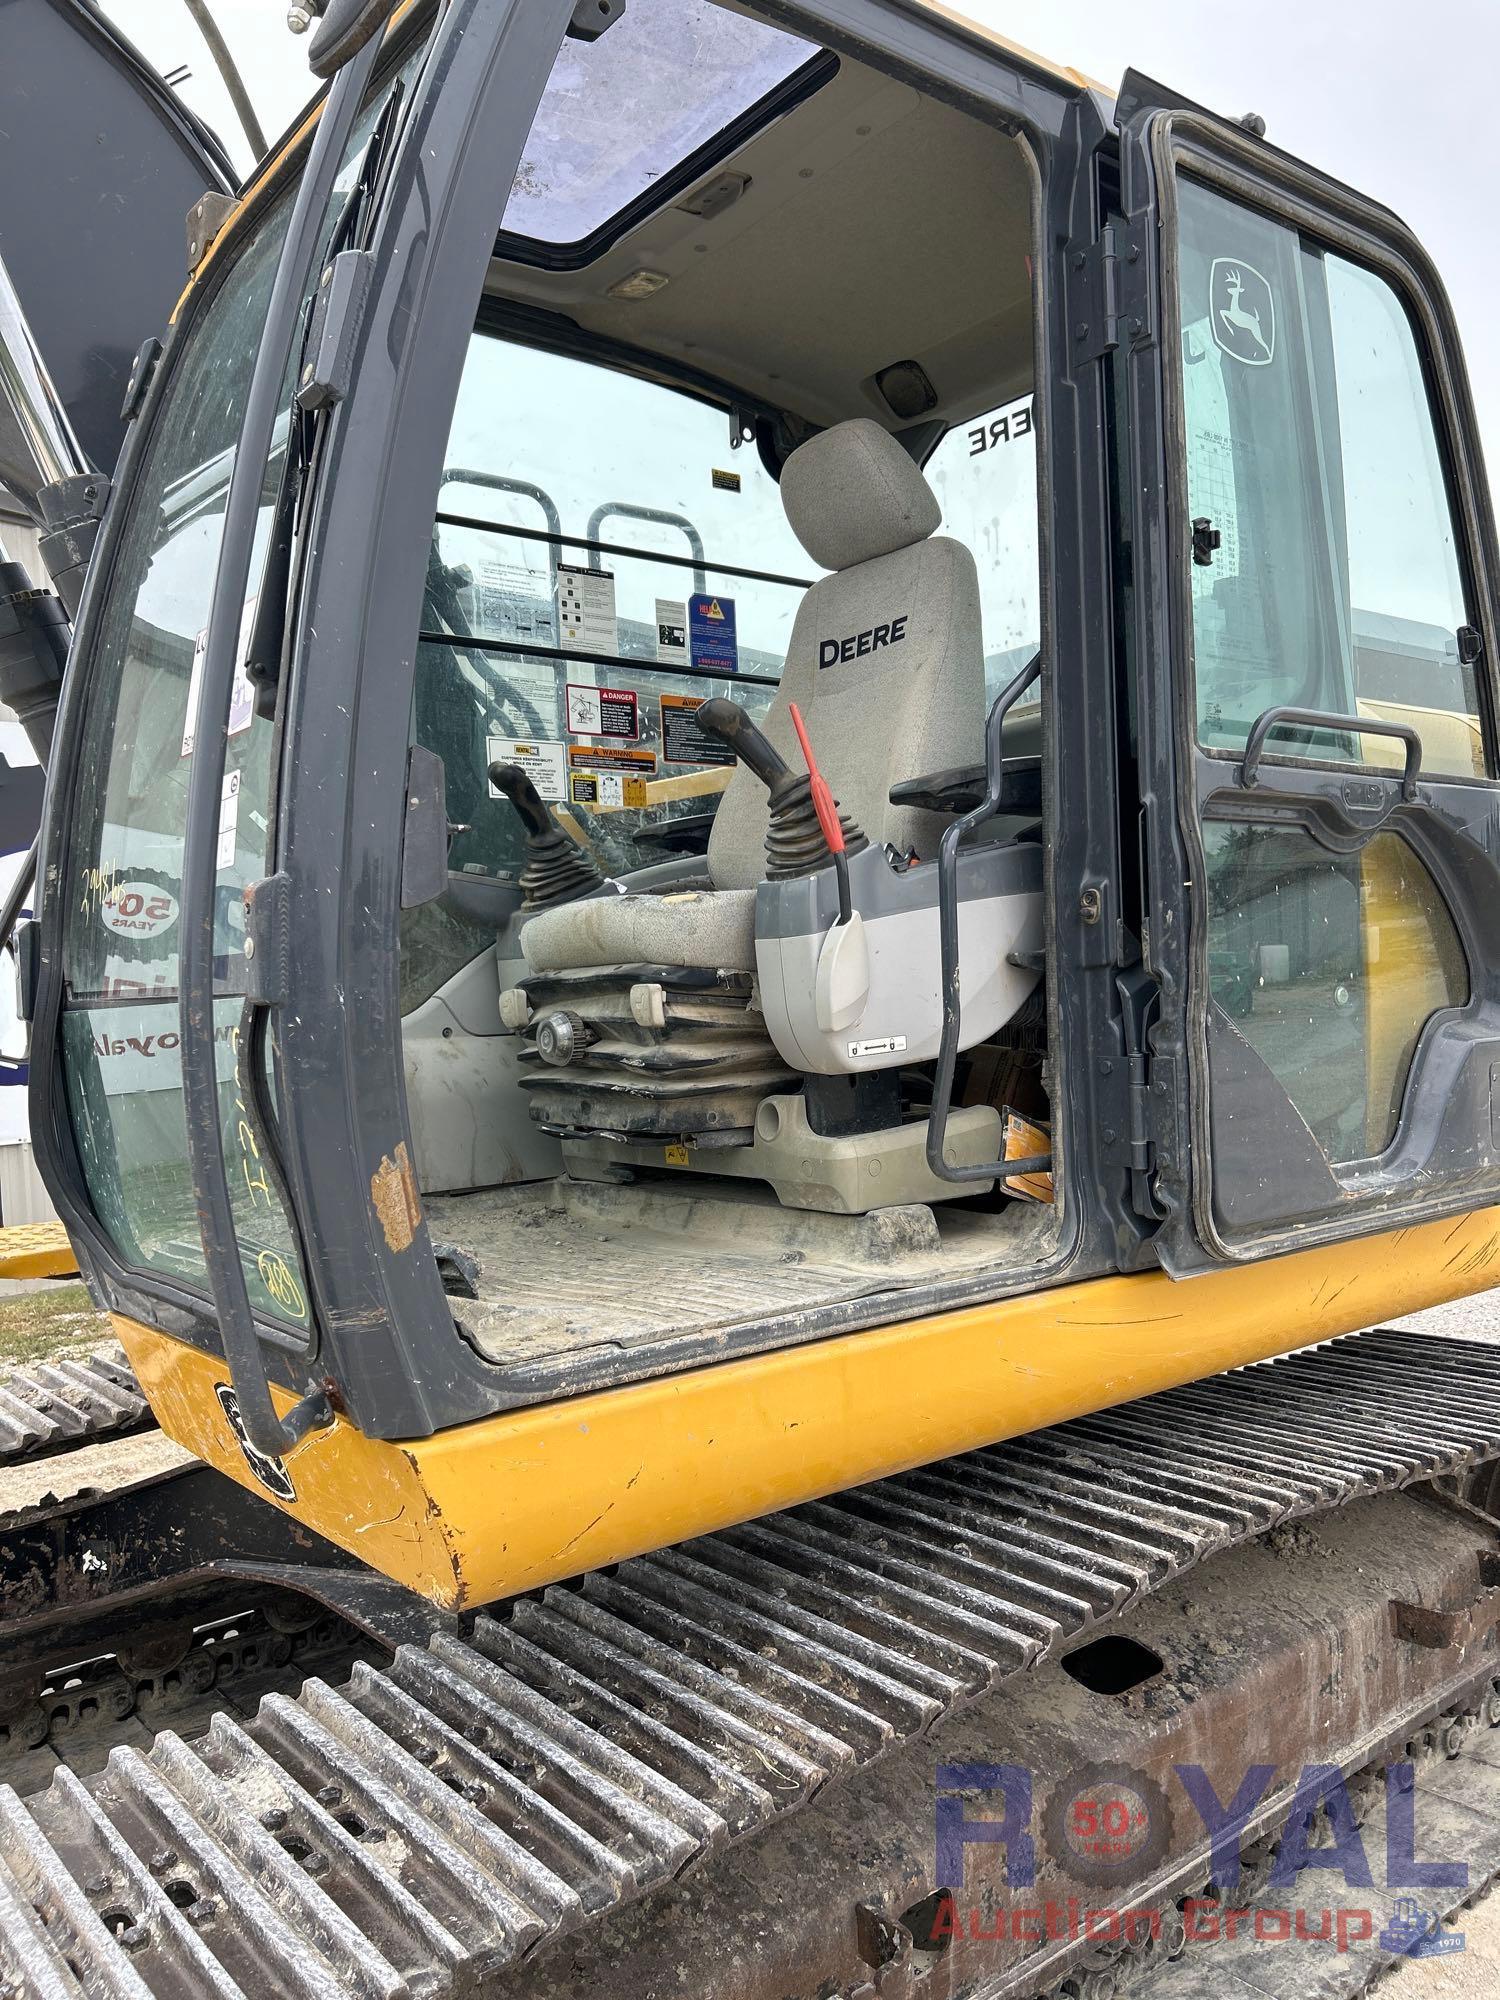 2019 John Deer 130G Hydraulic Excavator